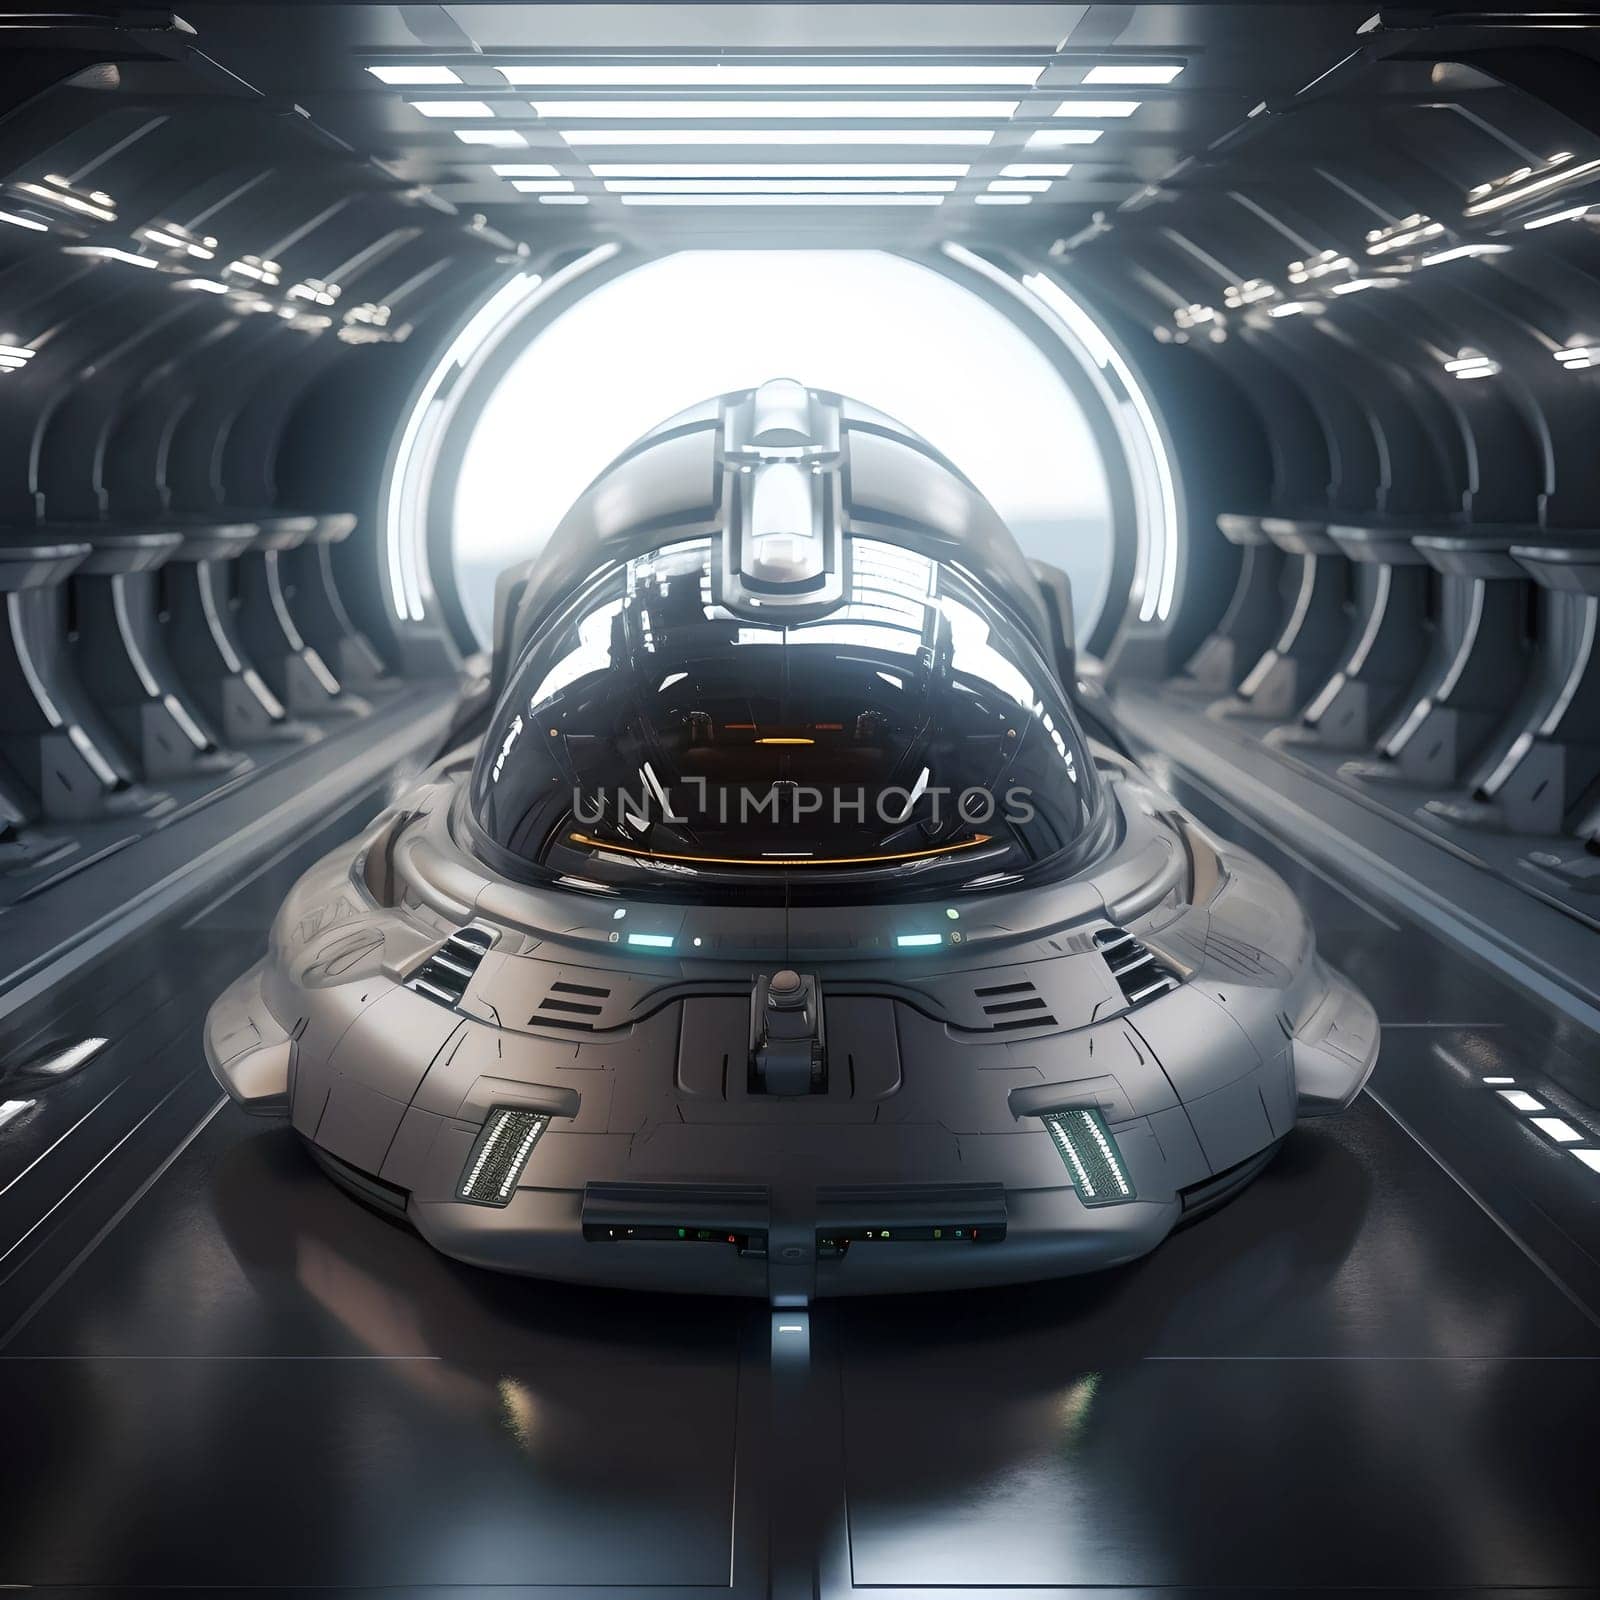 Futuristic spaceship by cherezoff